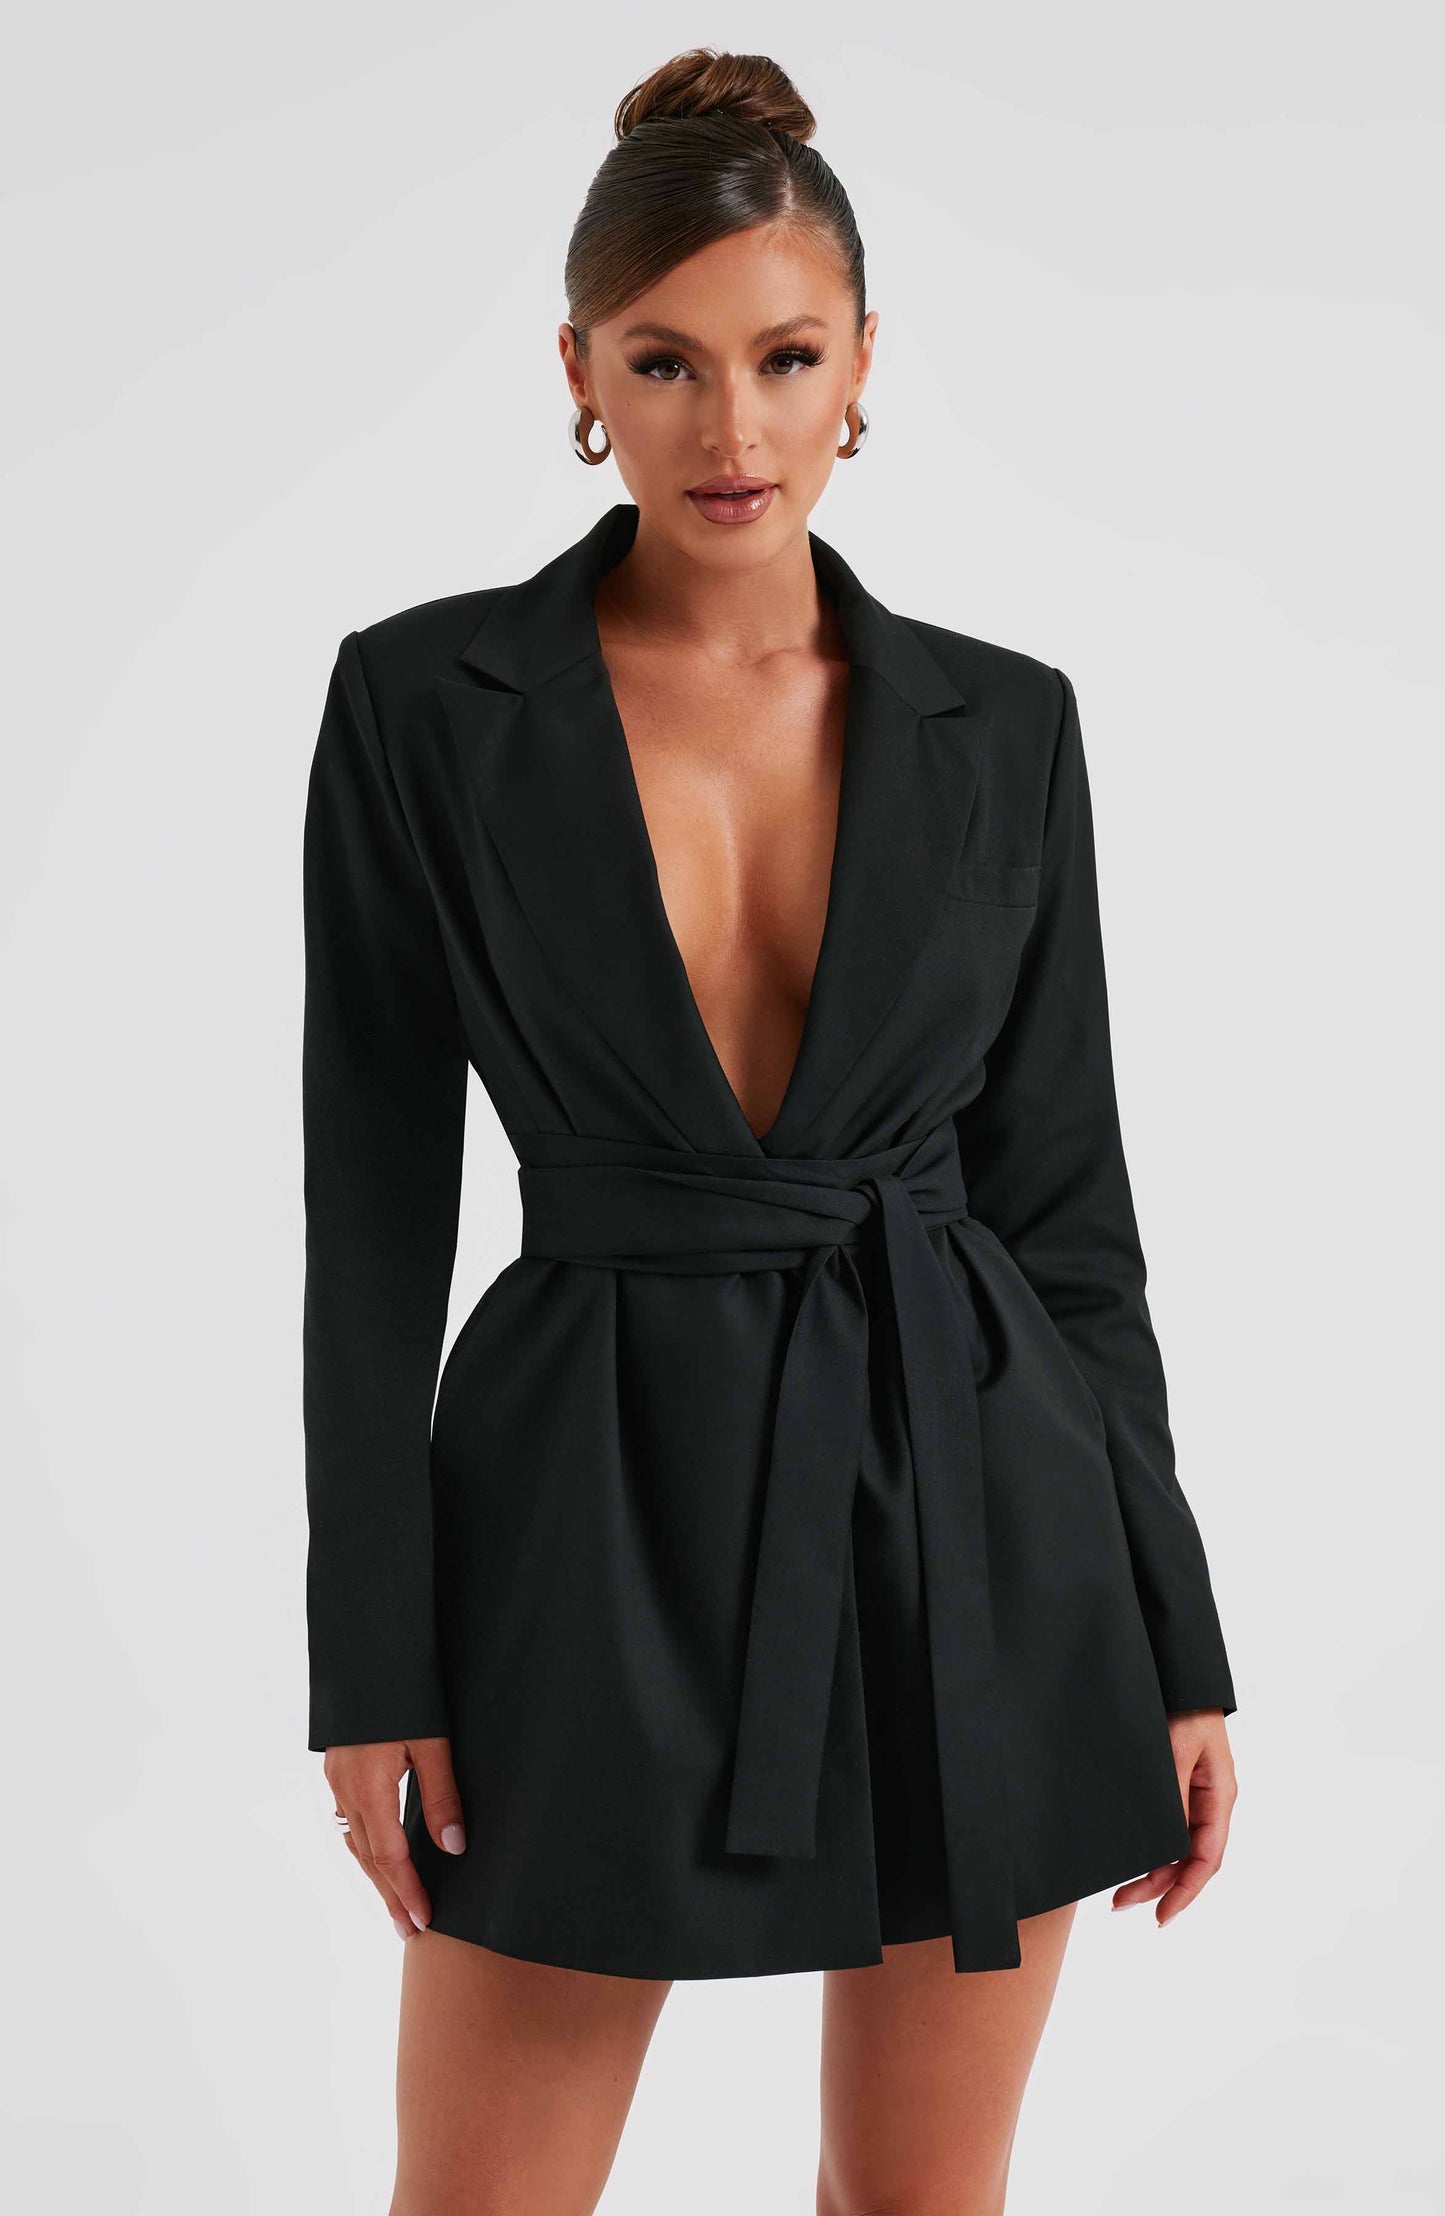 Heather Suit Dress - Black